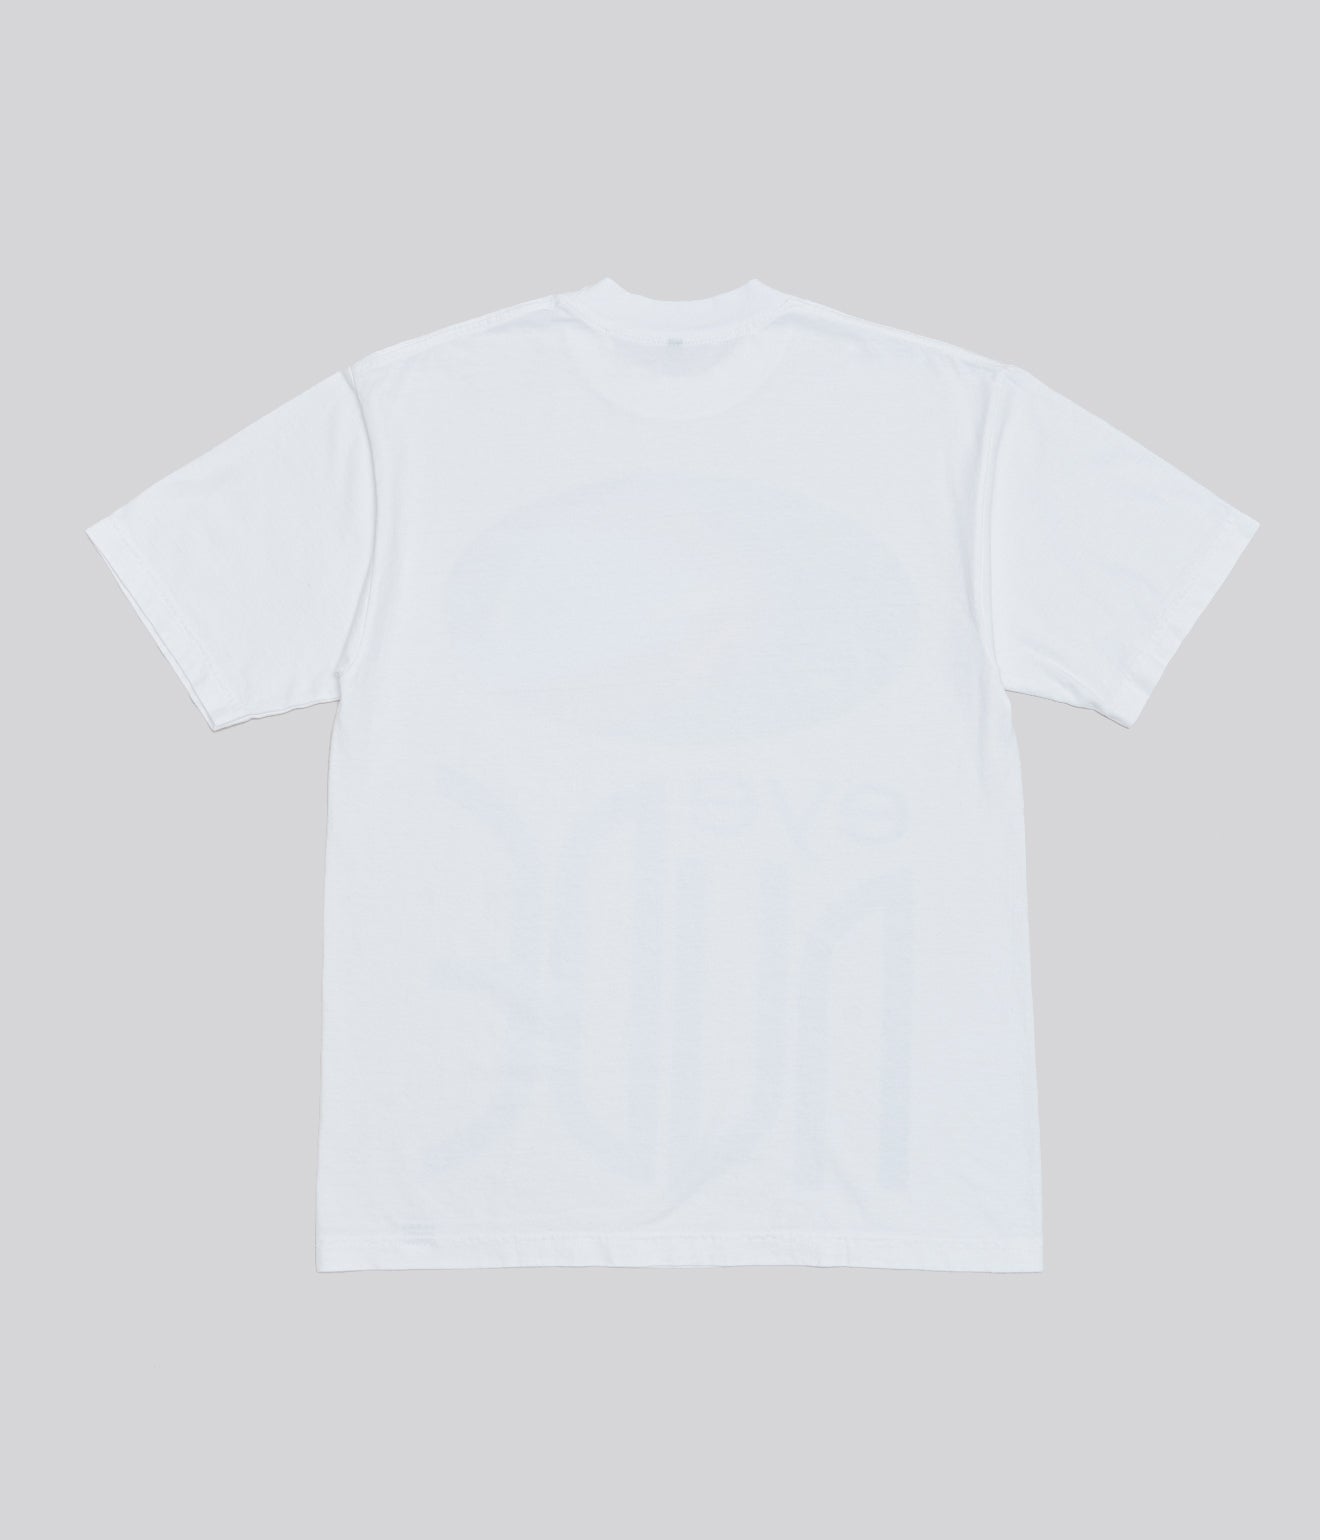 b.Eautiful "Eye Nude T-Shirt" White - WEAREALLANIMALS